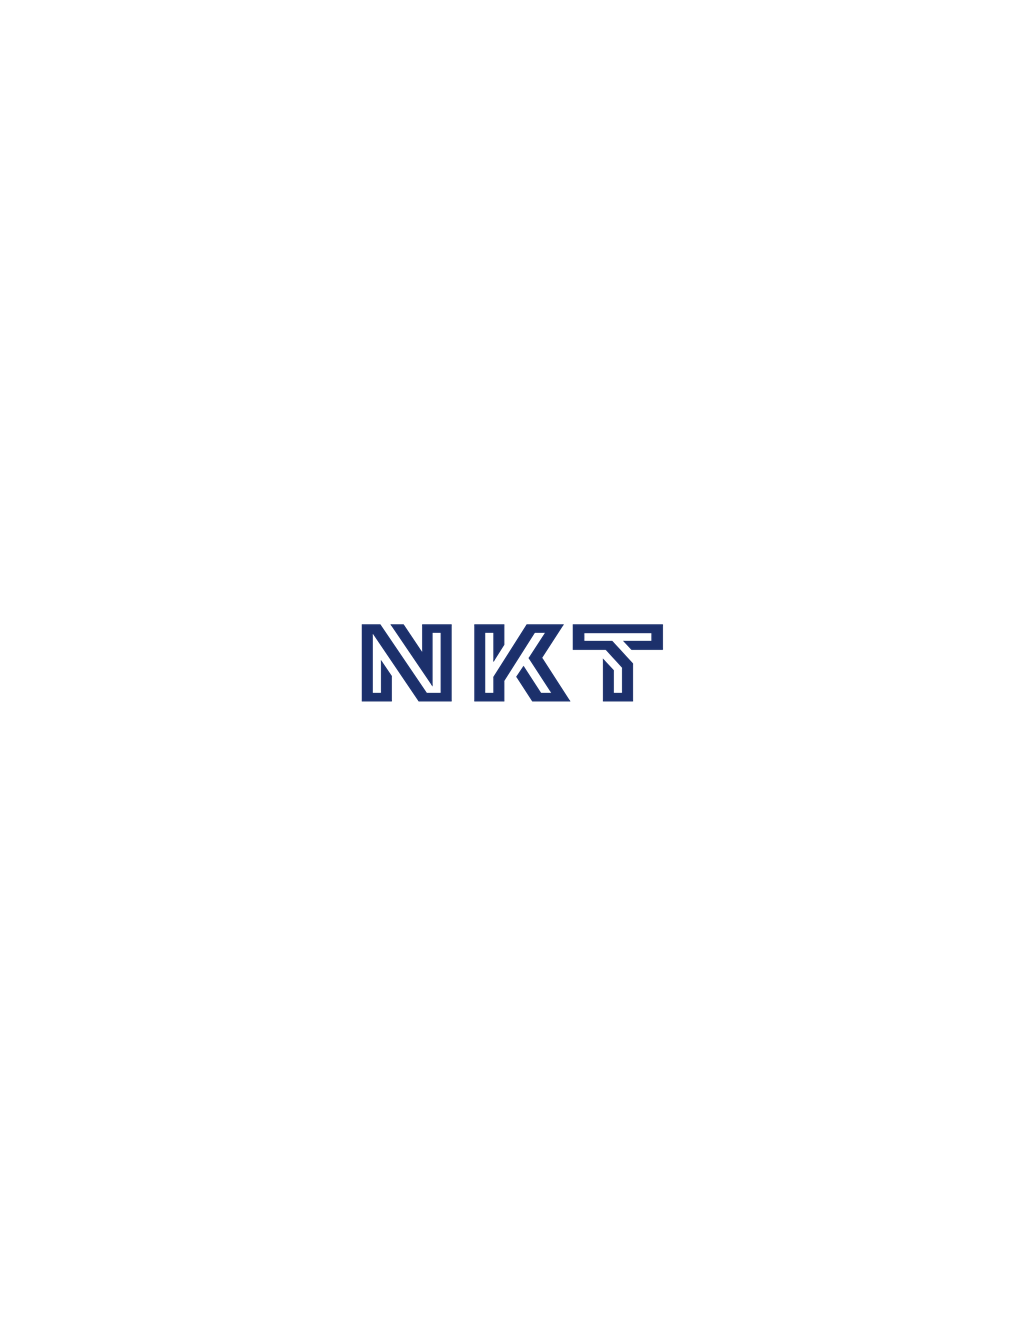 NKT logotype, transparent .png, medium, large